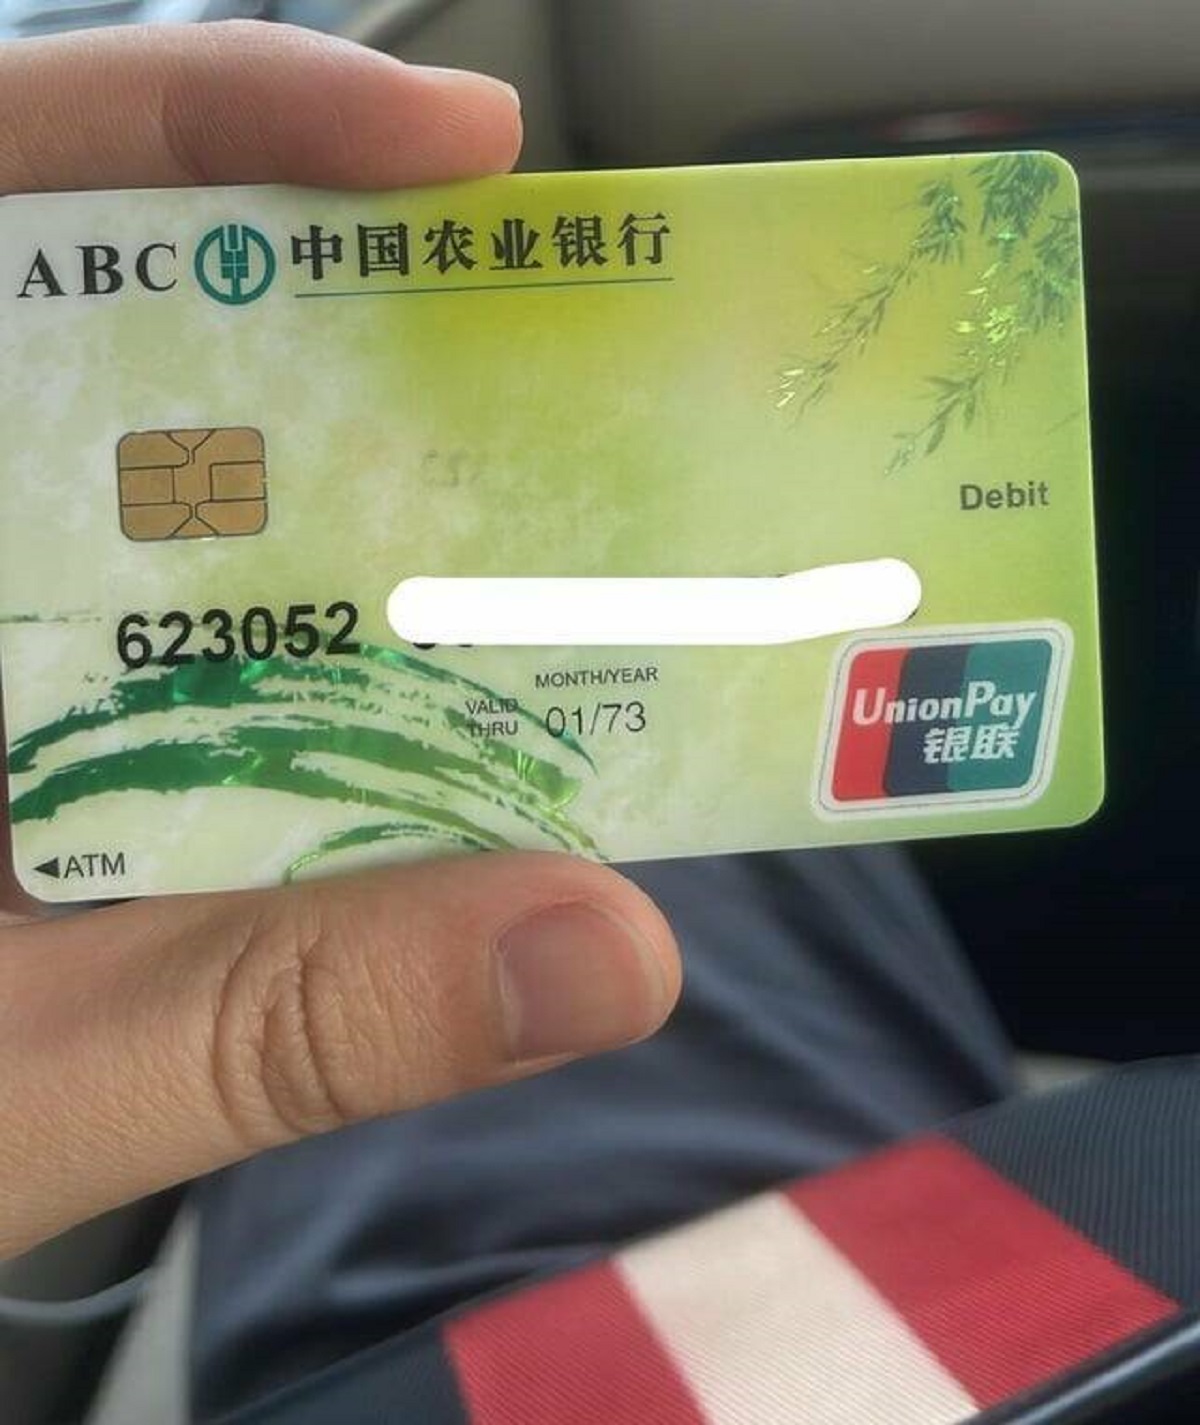 "My new debit card expires in ~50 years"